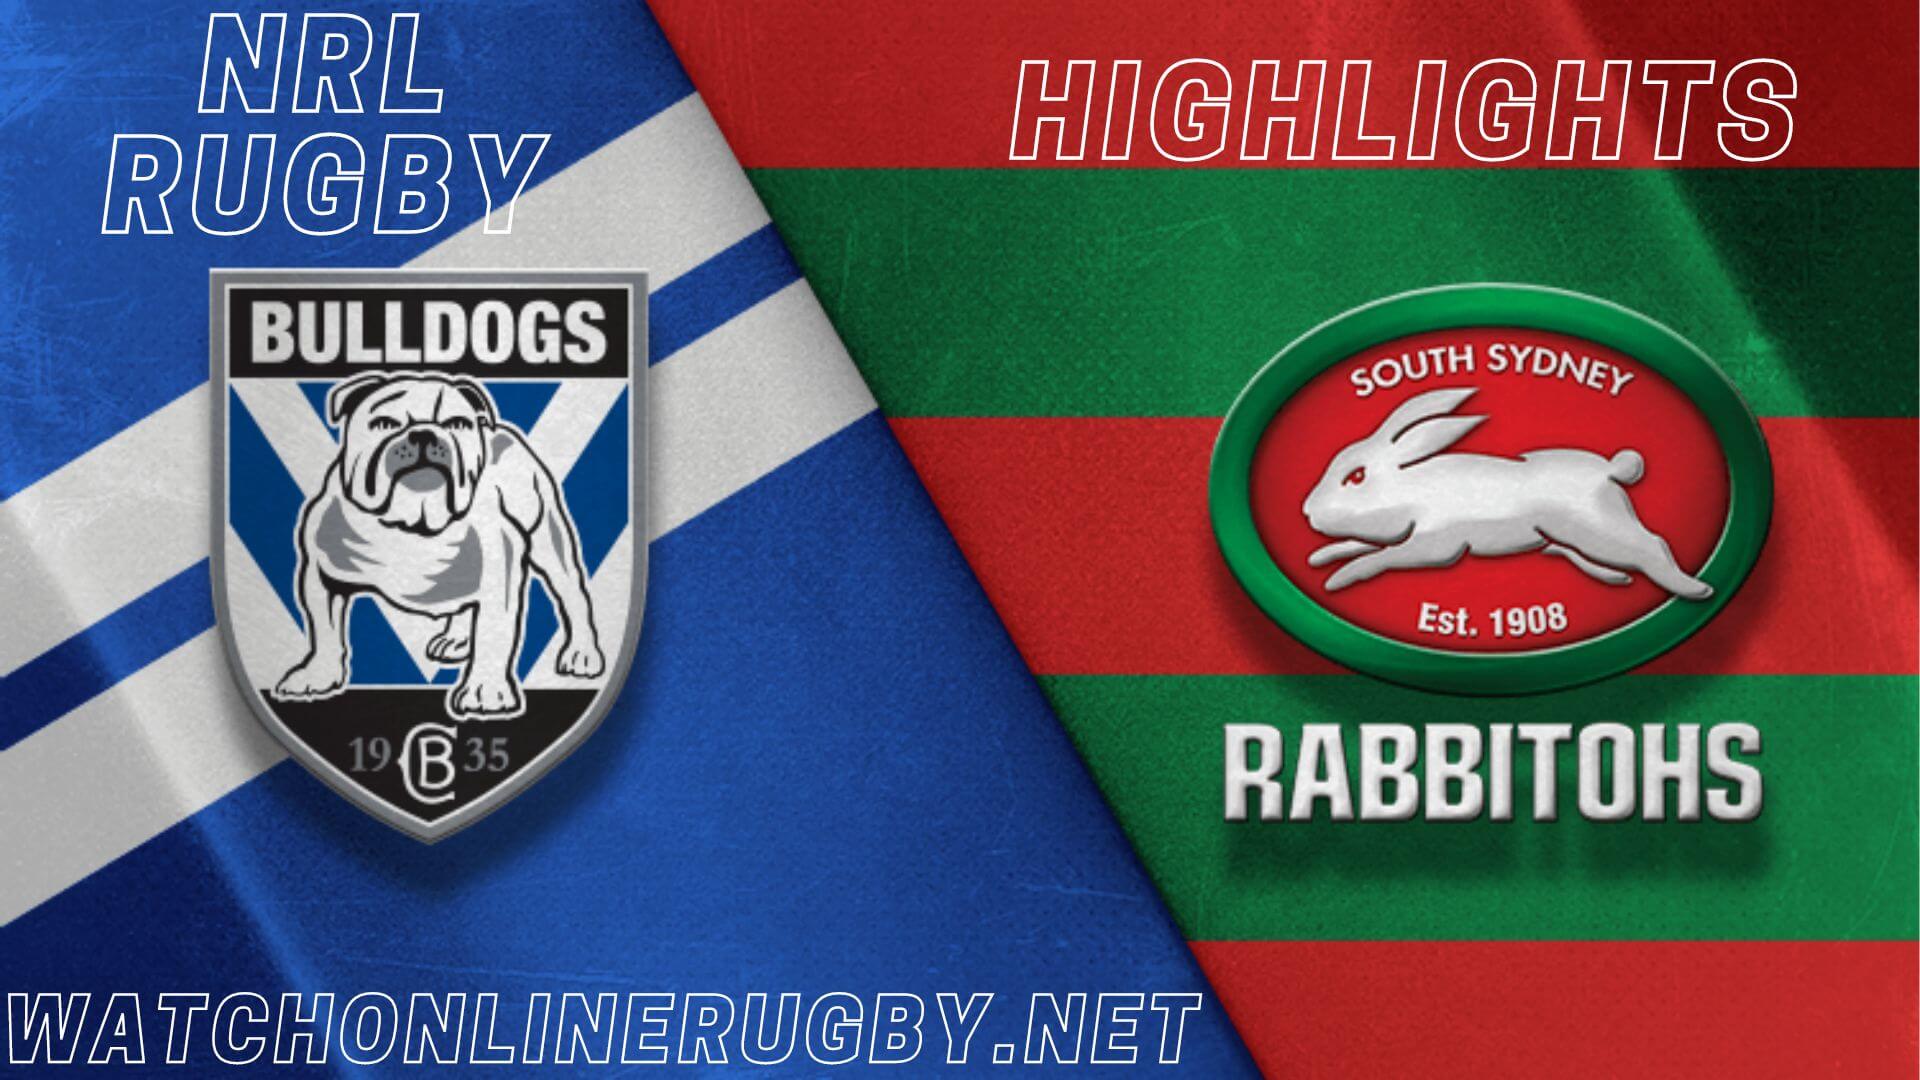 Bulldogs Vs Rabbitohs Highlights RD 18 NRL Rugby